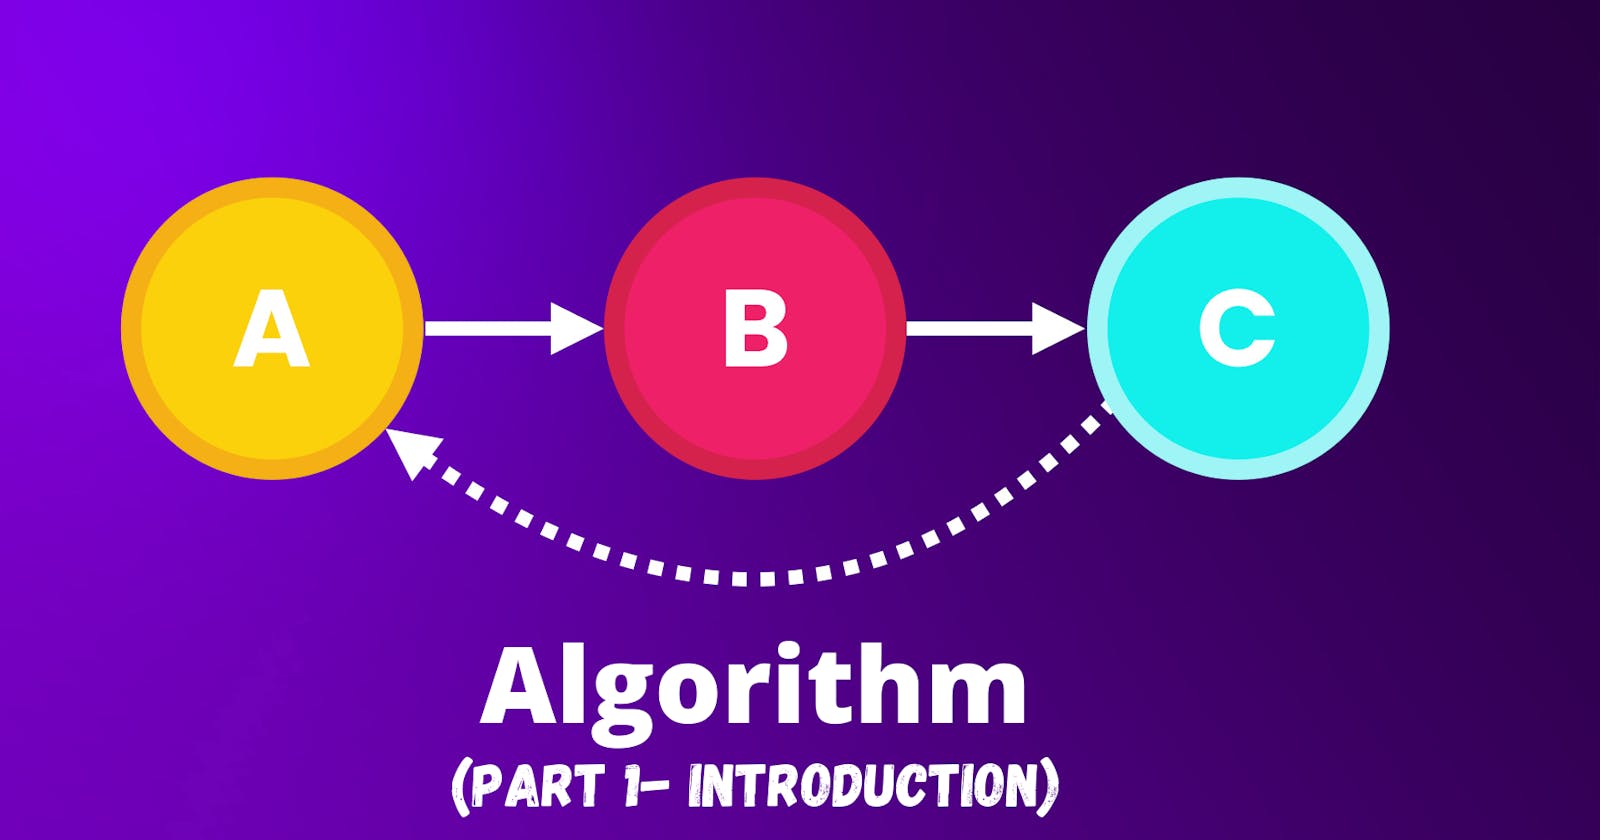 Introduction of Algorithm